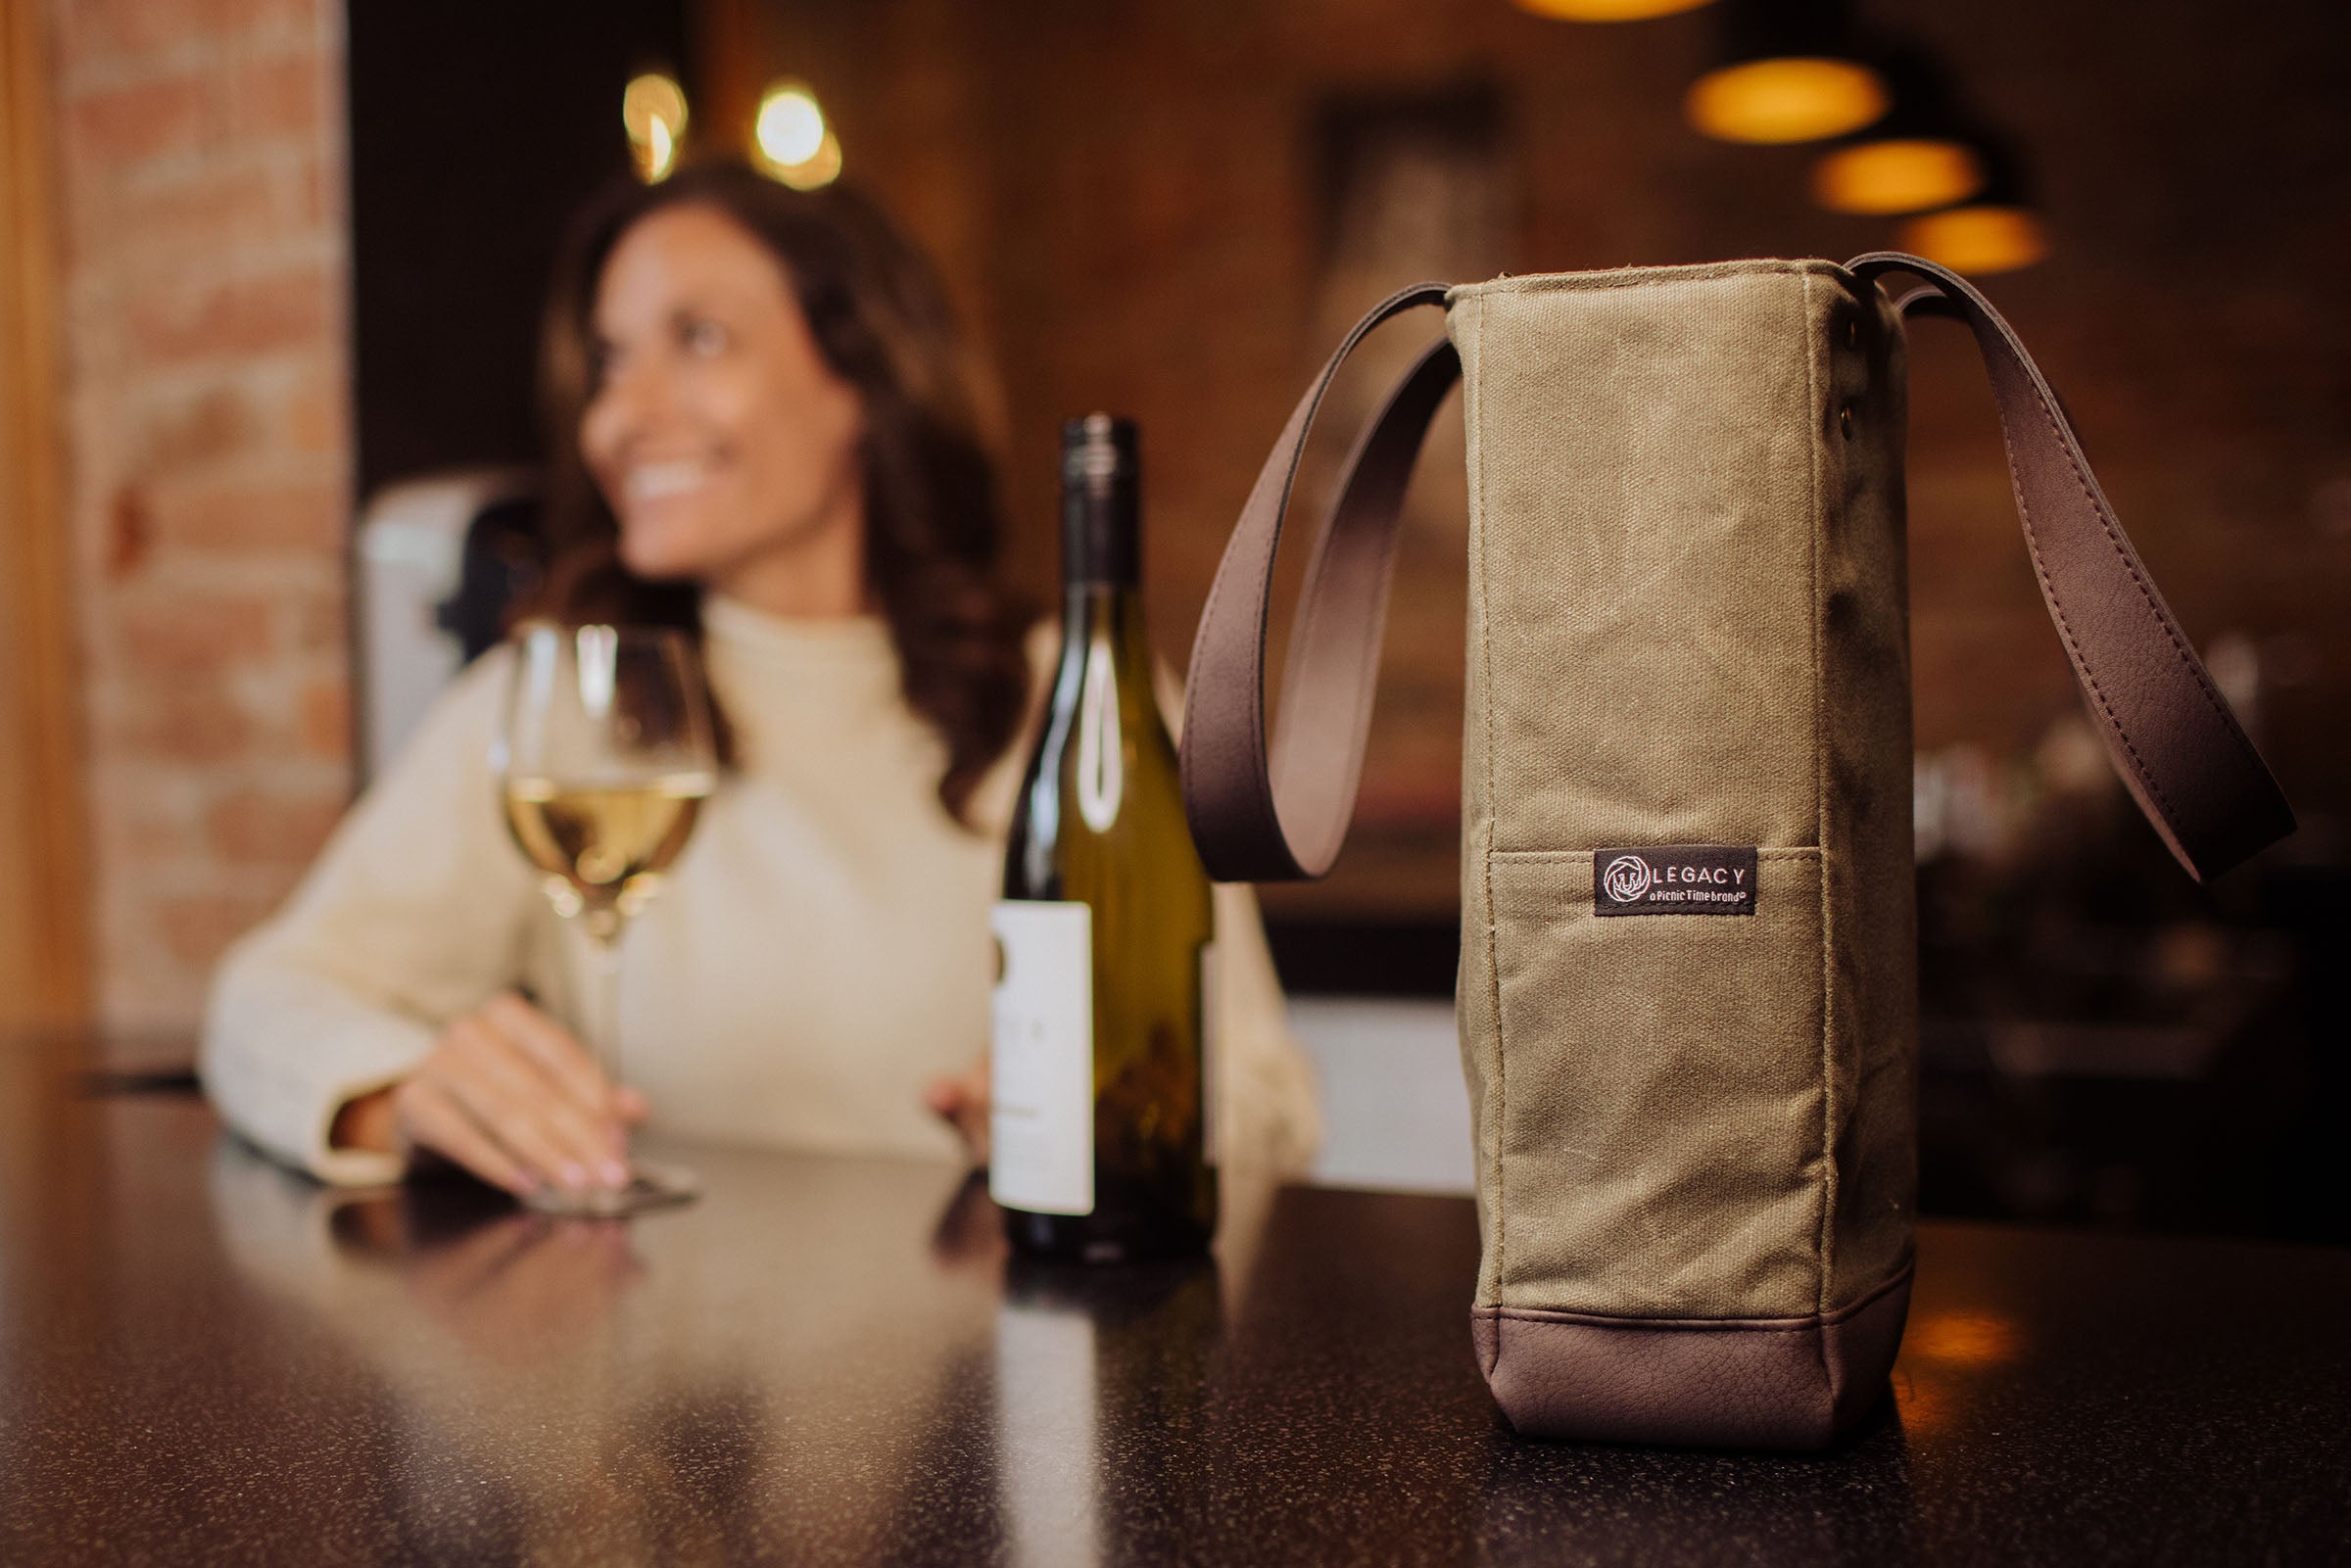 San Francisco 49ers - 2 Bottle Insulated Wine Cooler Bag